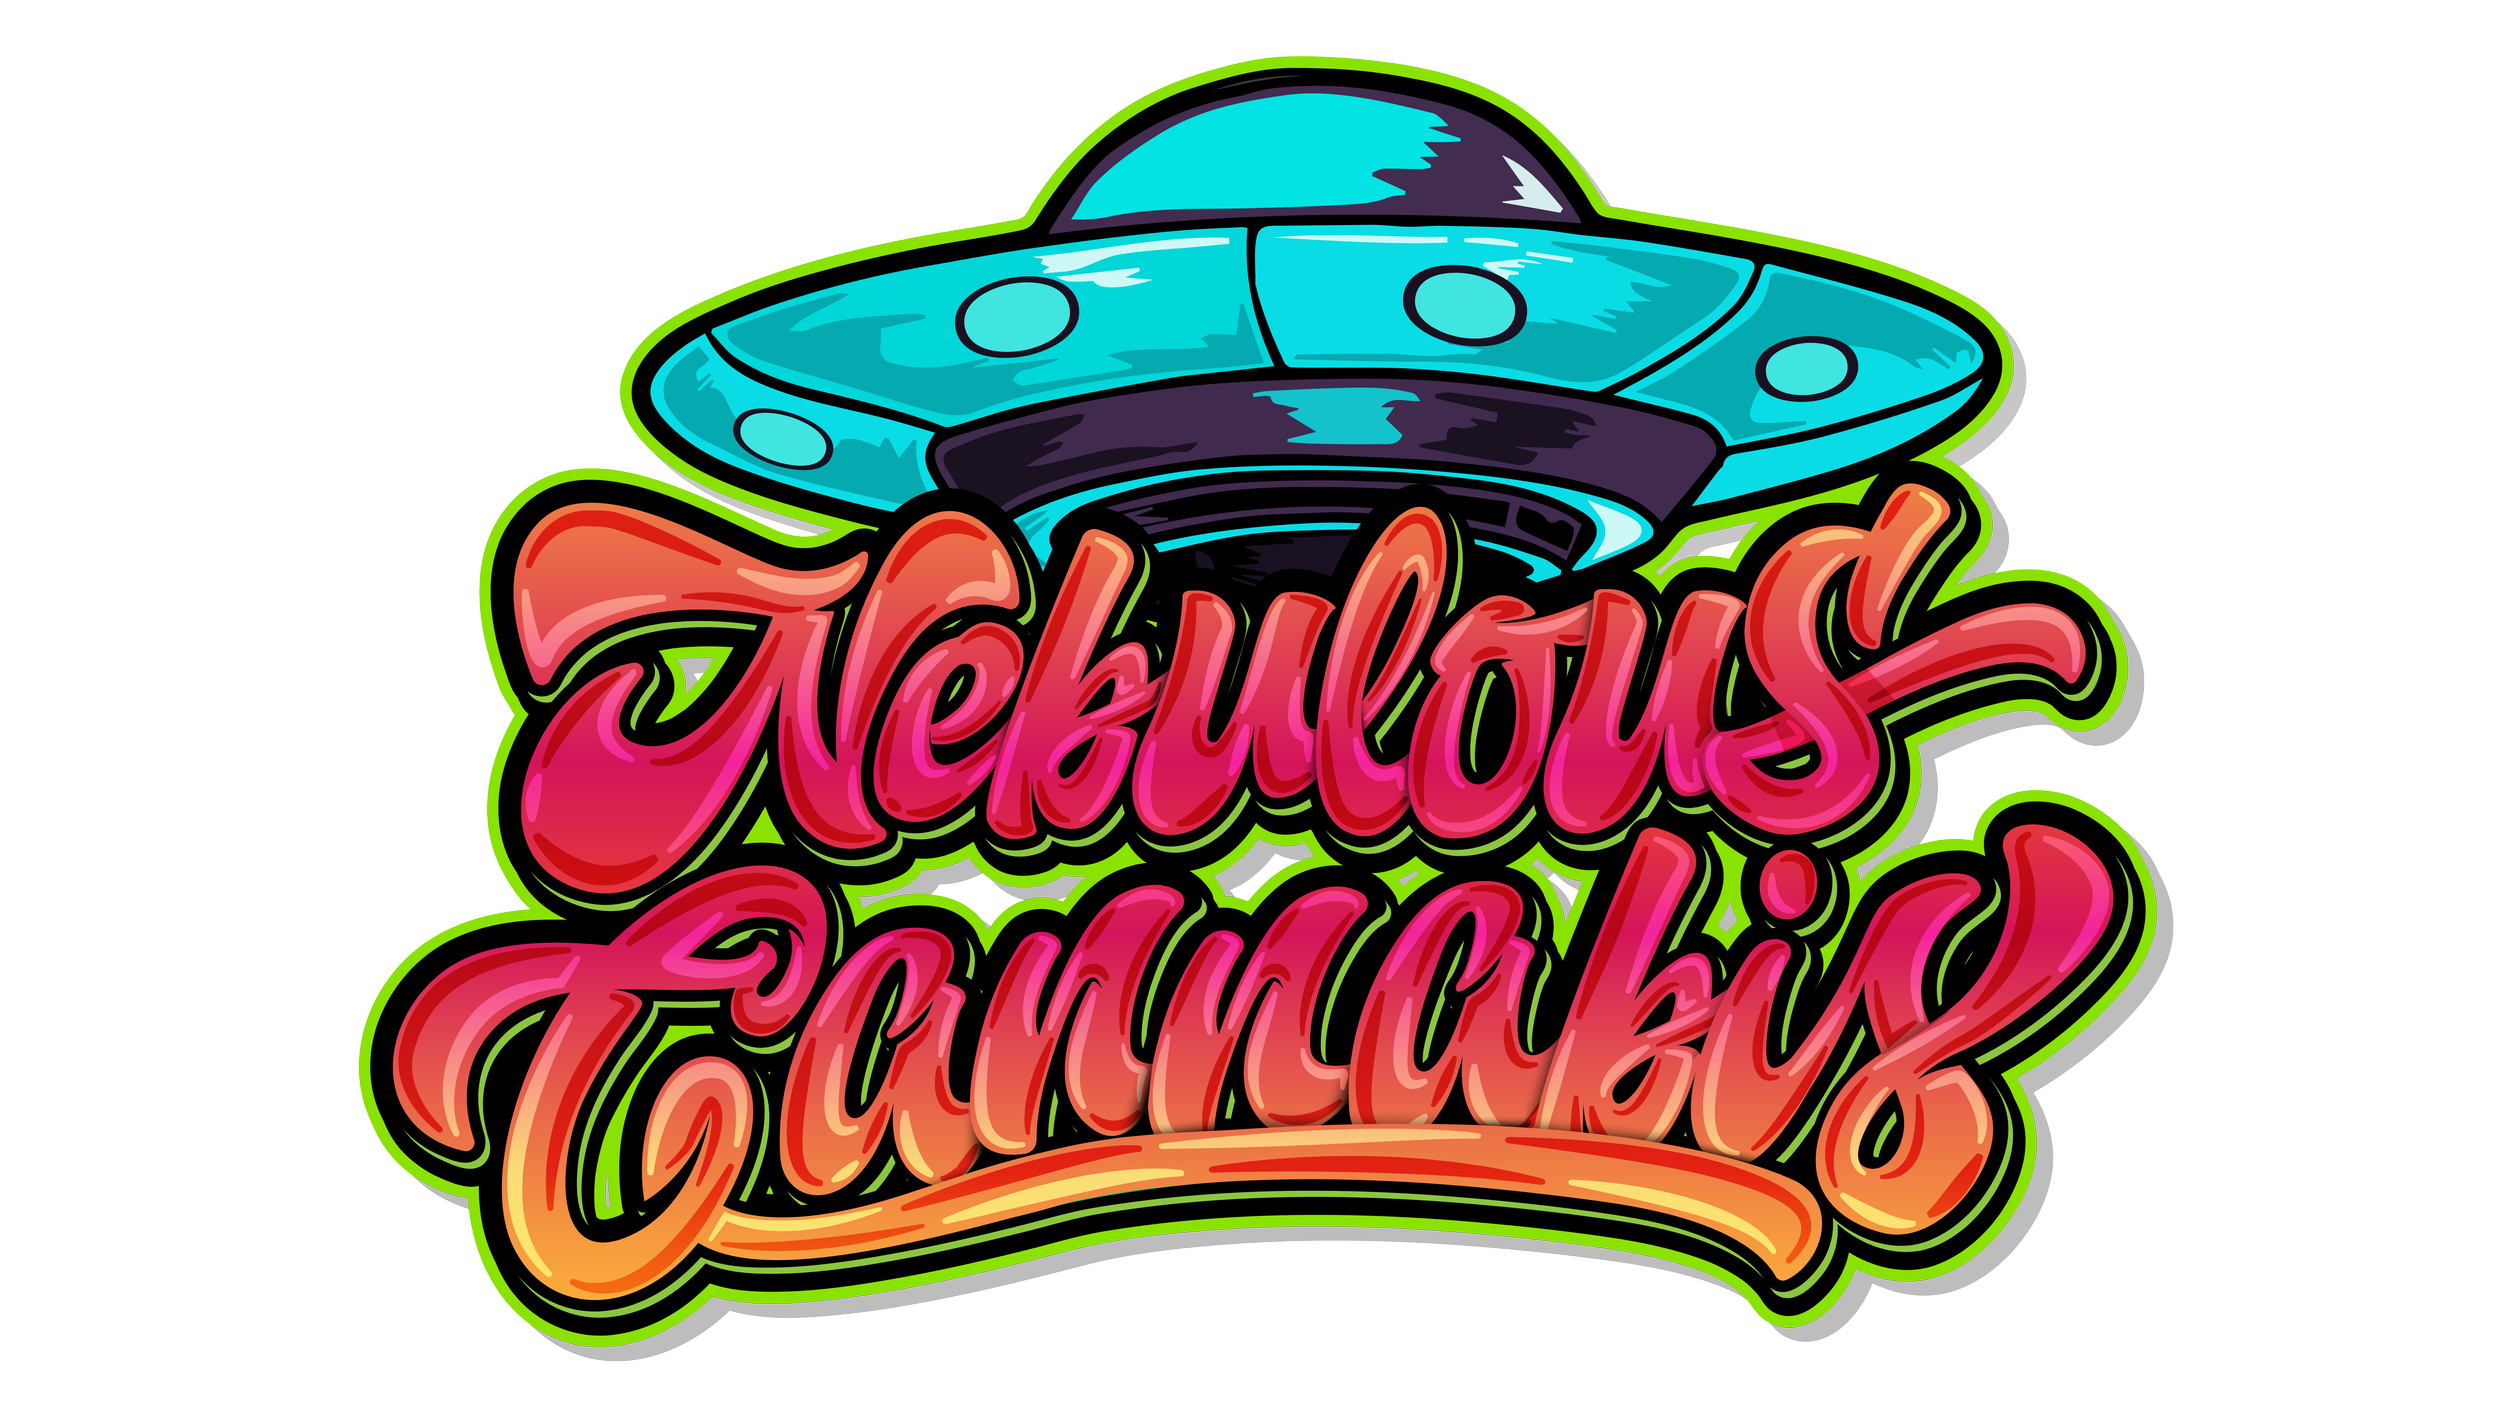 Nebulous Cannabis (1)_Mesa de trabajo 1 copia 7.png